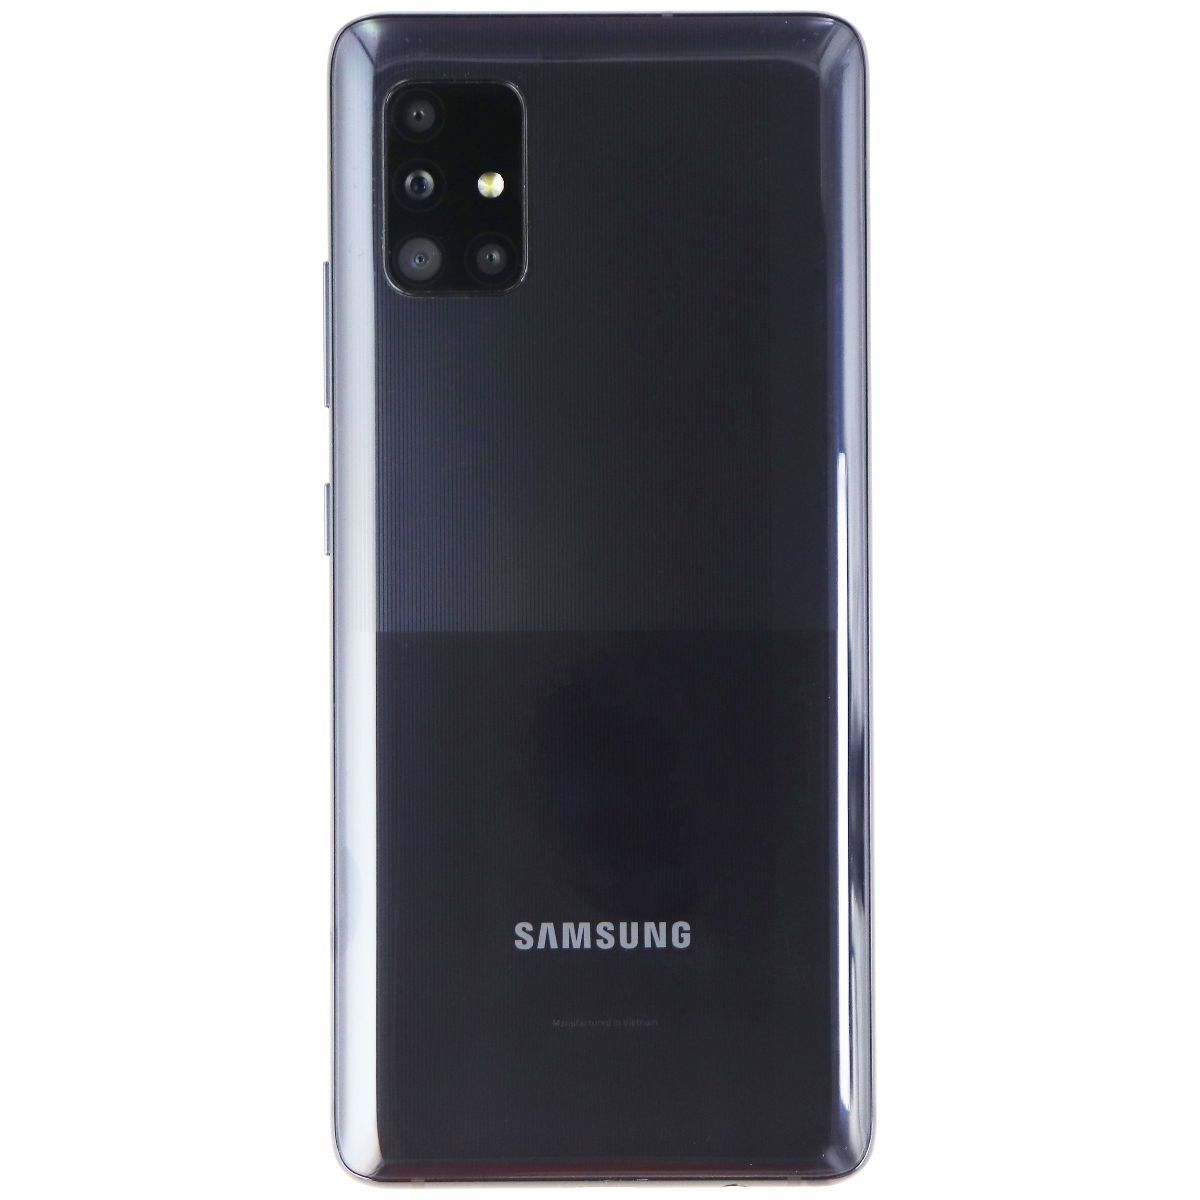 Samsung Galaxy A51 5G (6.5-inch) SM-A516U1 (Unlocked) - 128GB / Black Cell Phones & Smartphones Samsung    - Simple Cell Bulk Wholesale Pricing - USA Seller